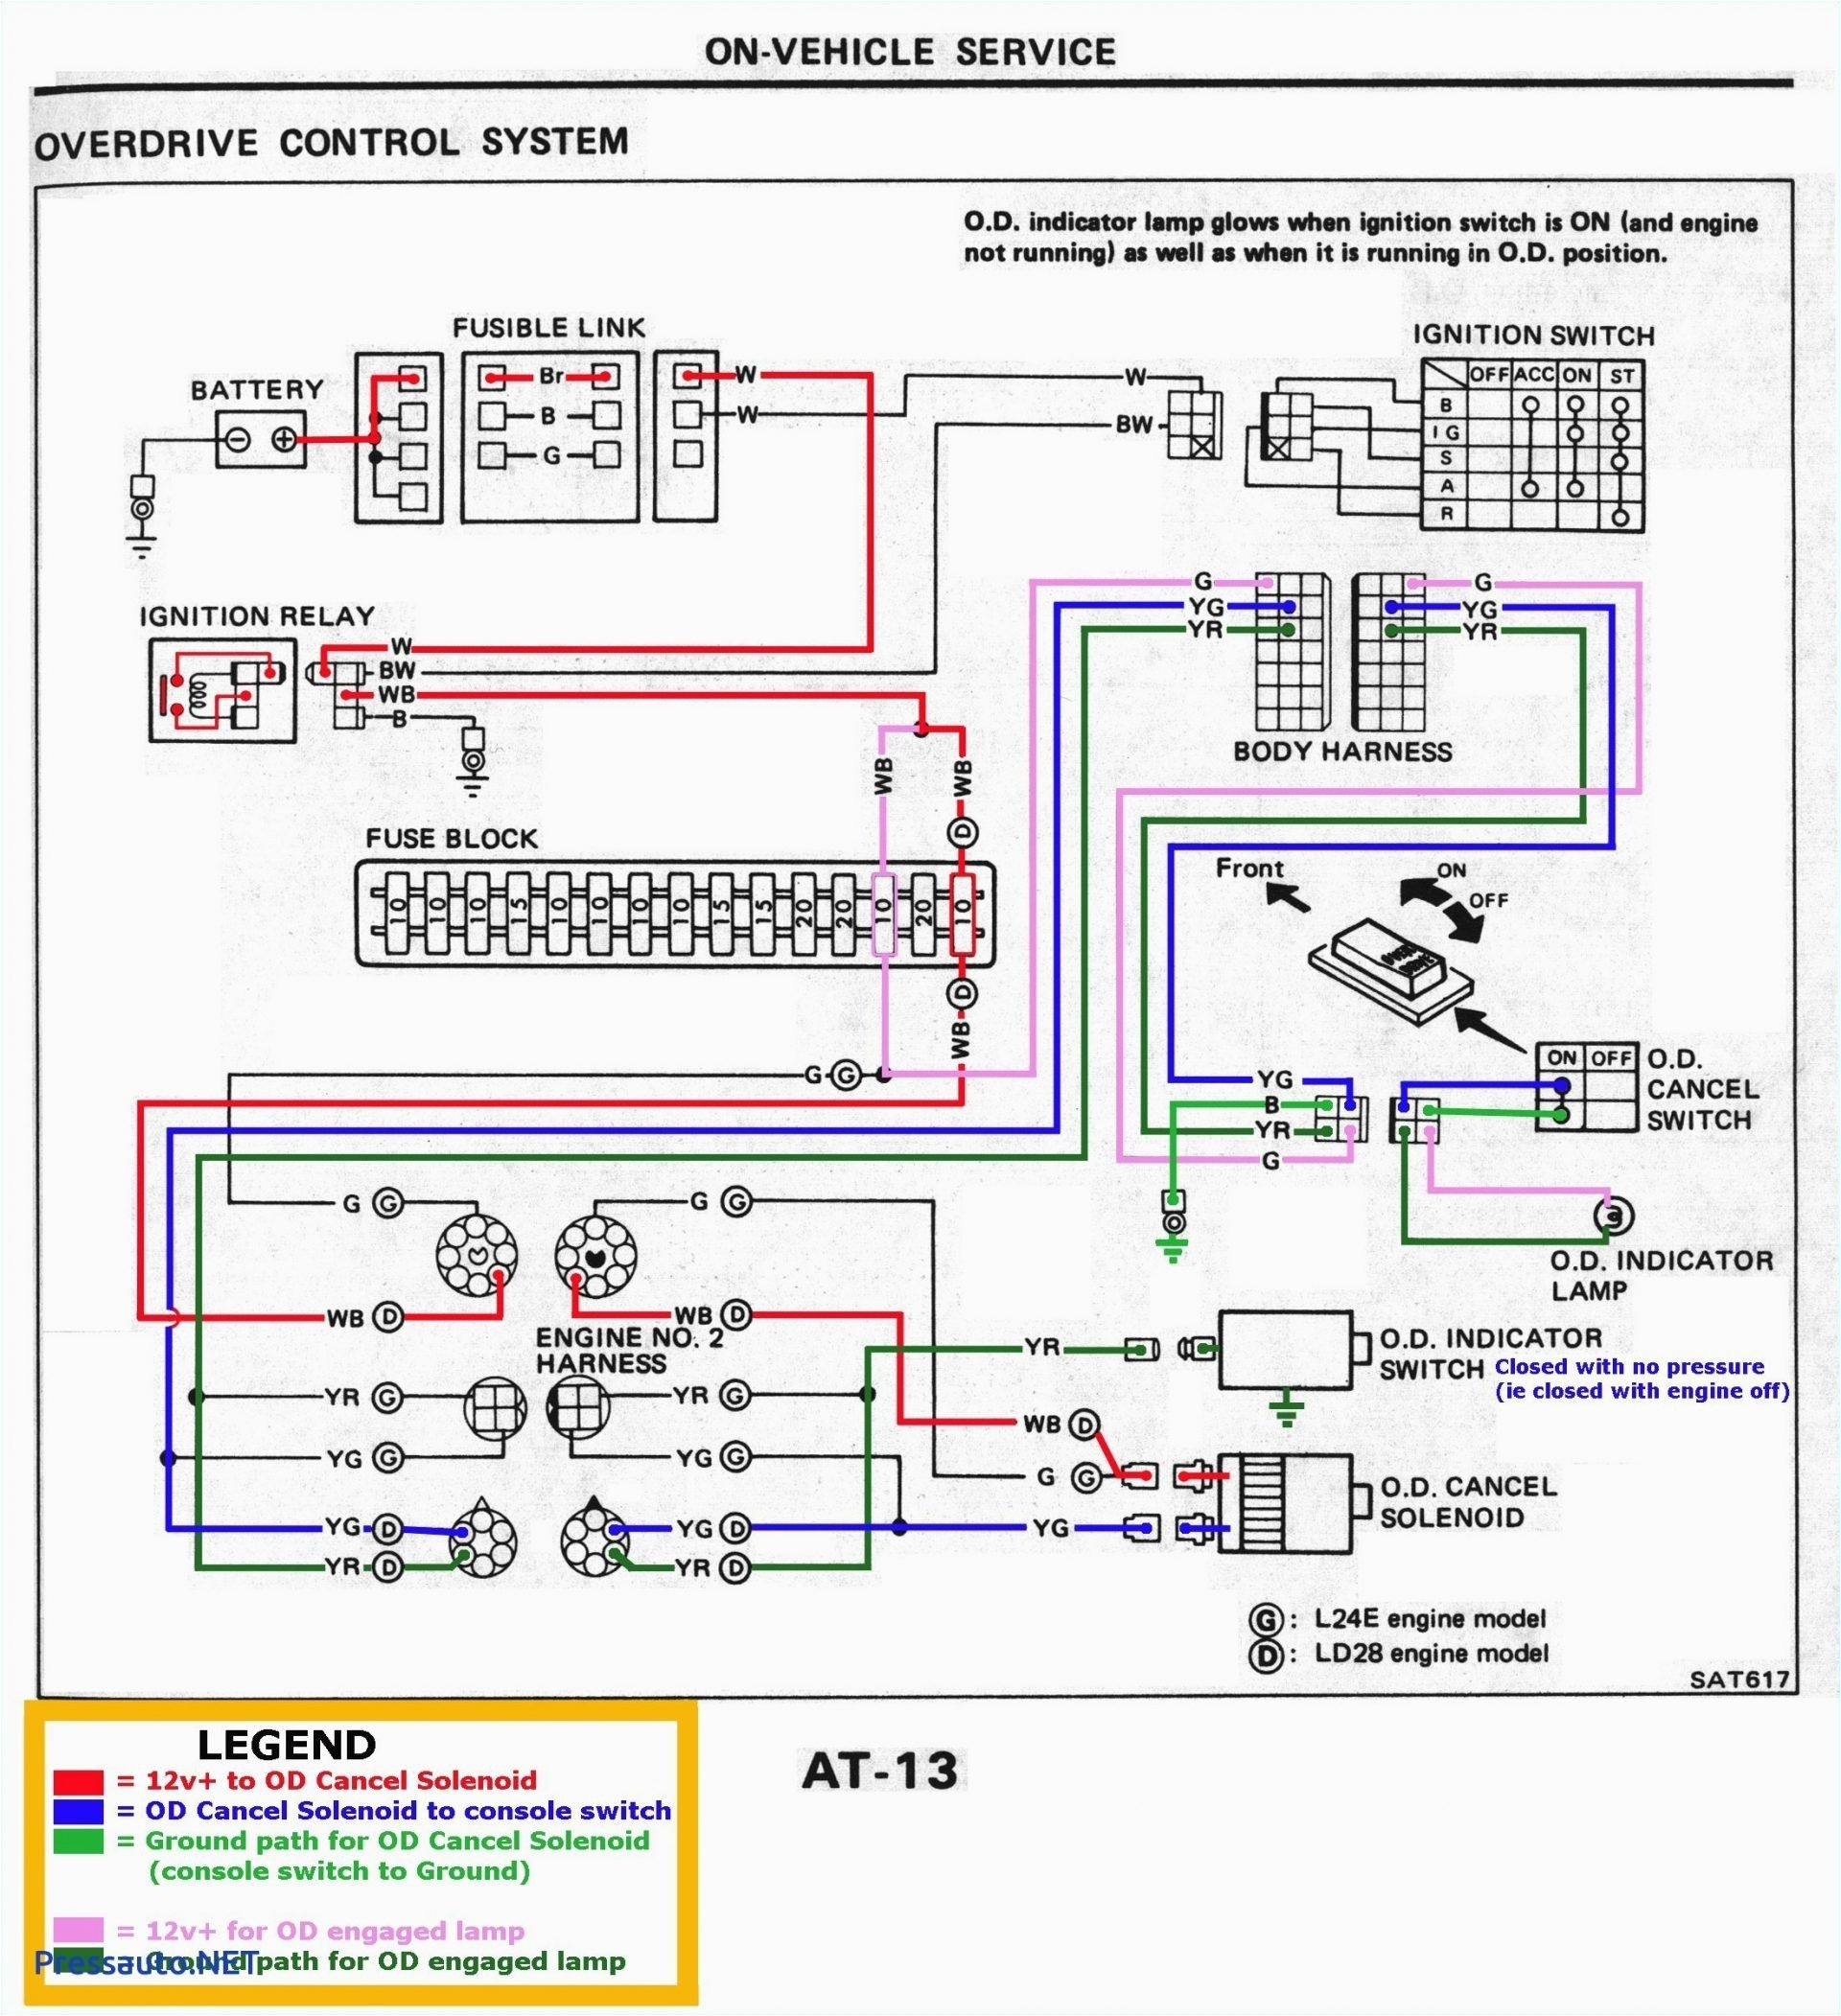 Lionel 022 Switch Wiring Diagram Free toyota Wiring Diagrams Blog Wiring Diagram